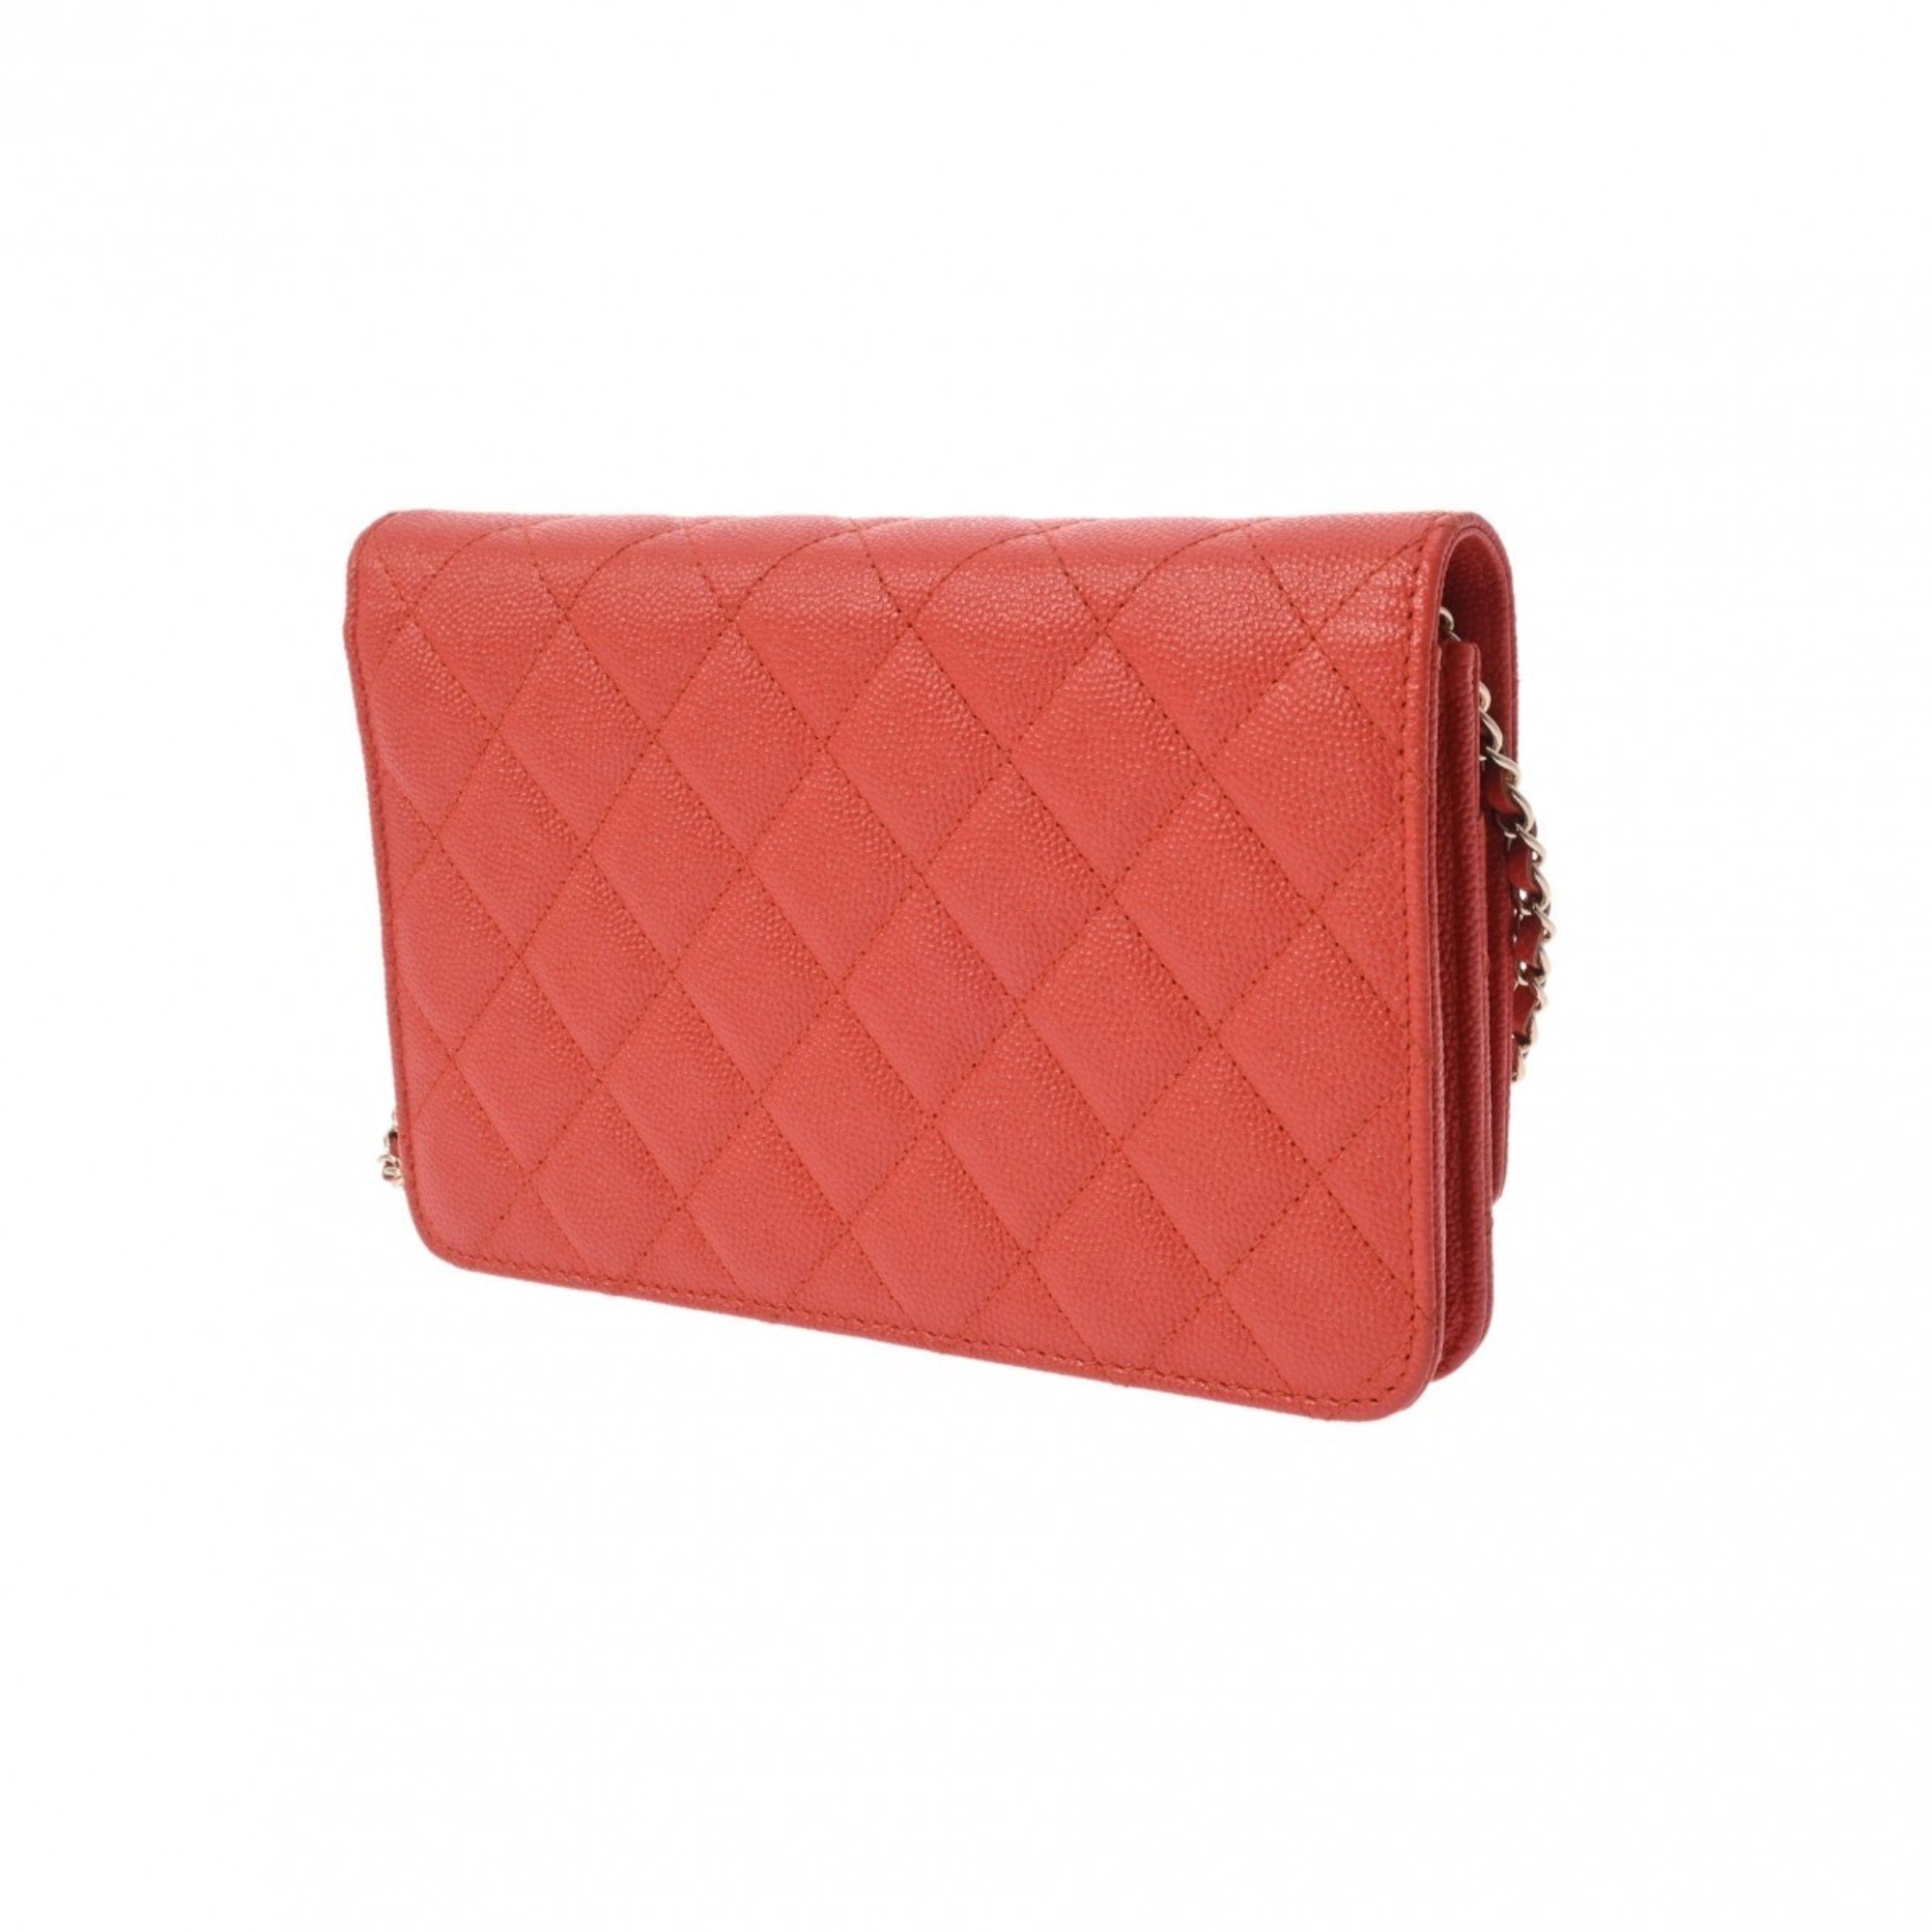 CHANEL Chanel Matelasse Coco Rock Chain Wallet Orange A80766 Women's Caviar Skin Shoulder Bag